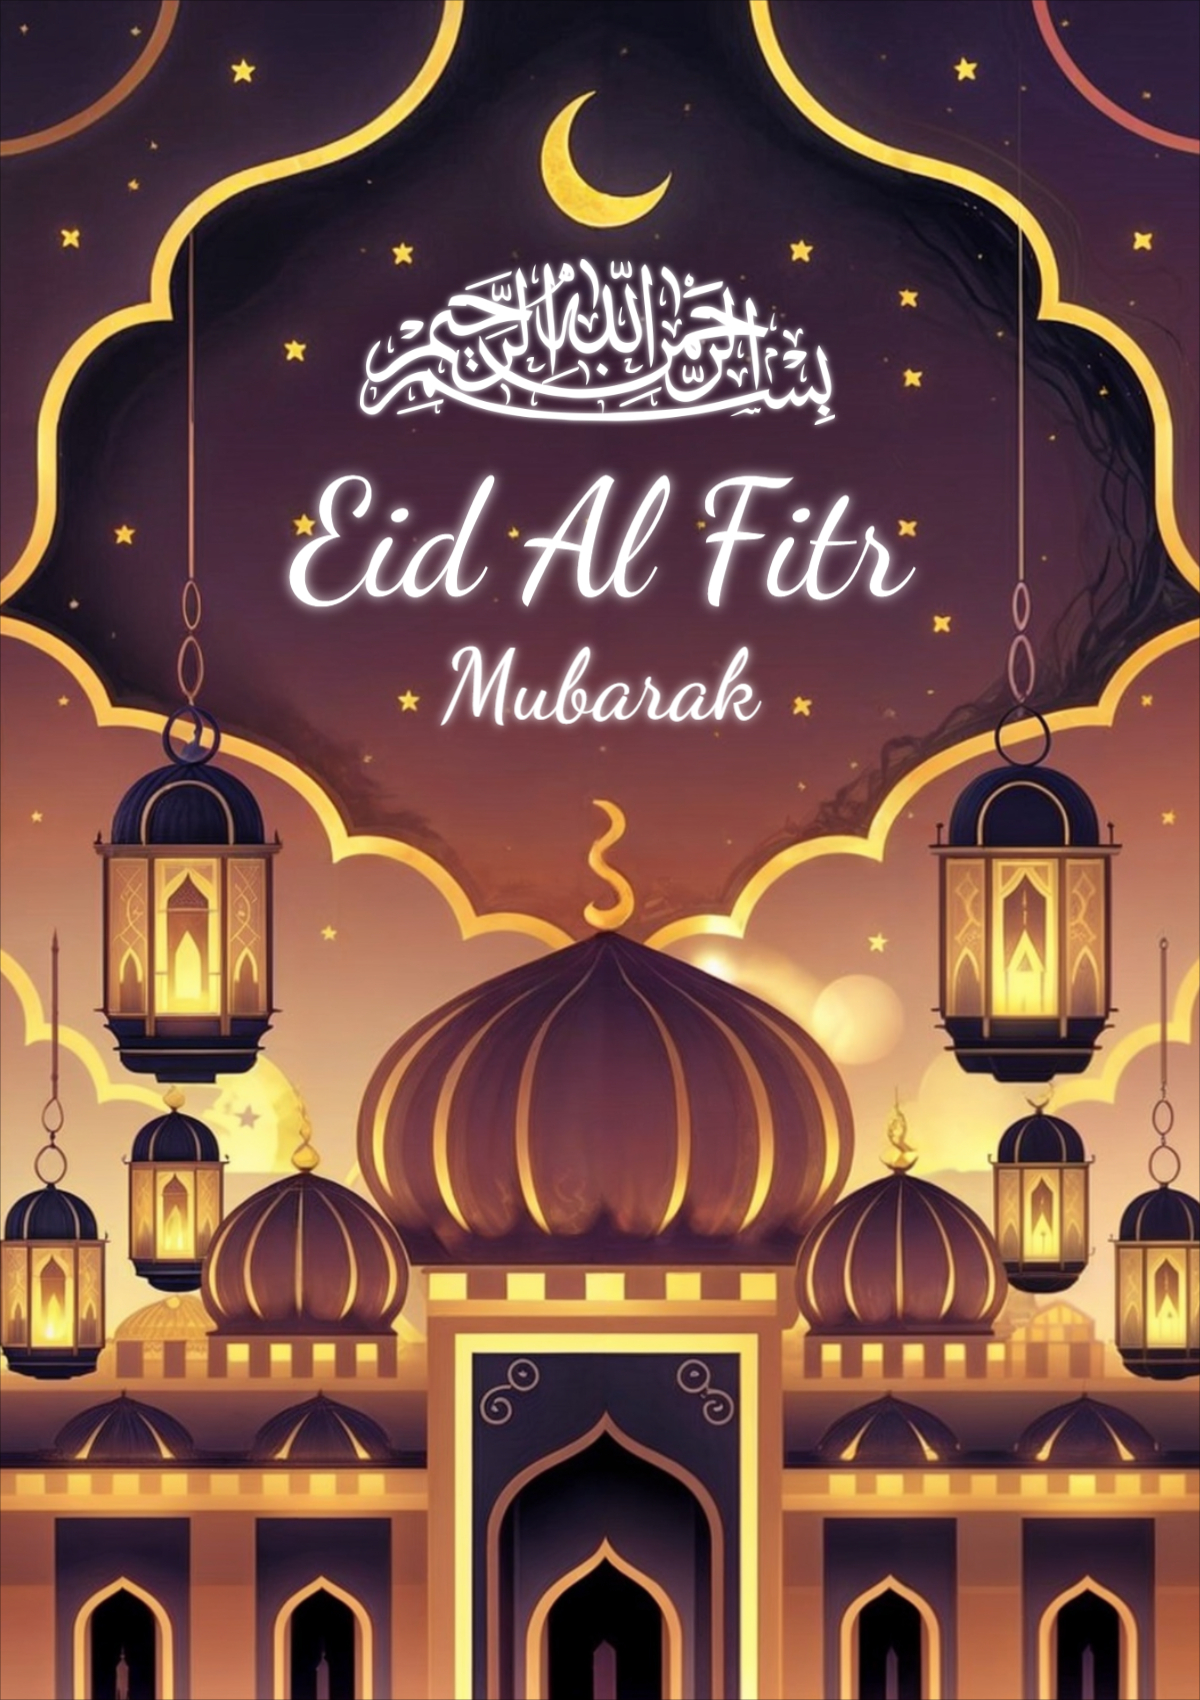 Eid Al Fitr Mubarak template design download for free